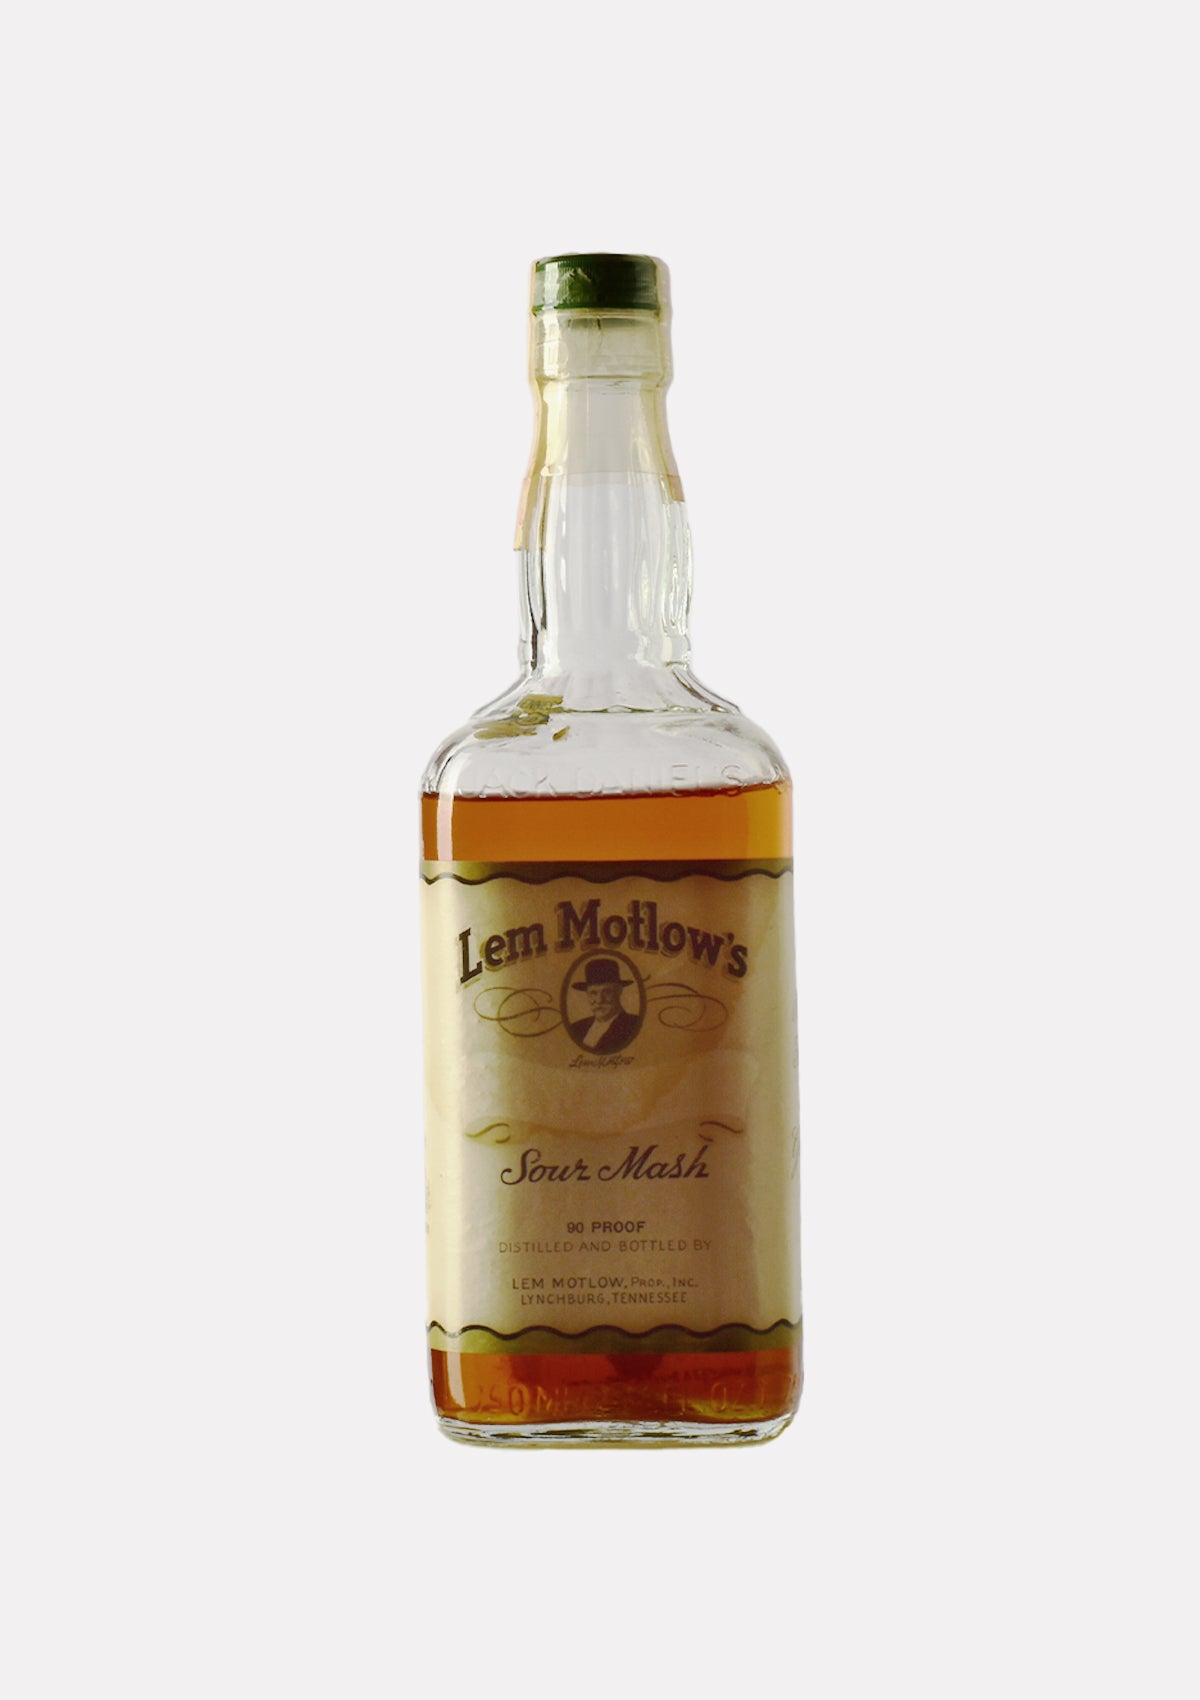 Lem Motlow`s Tennessee Sour Mash Whiskey